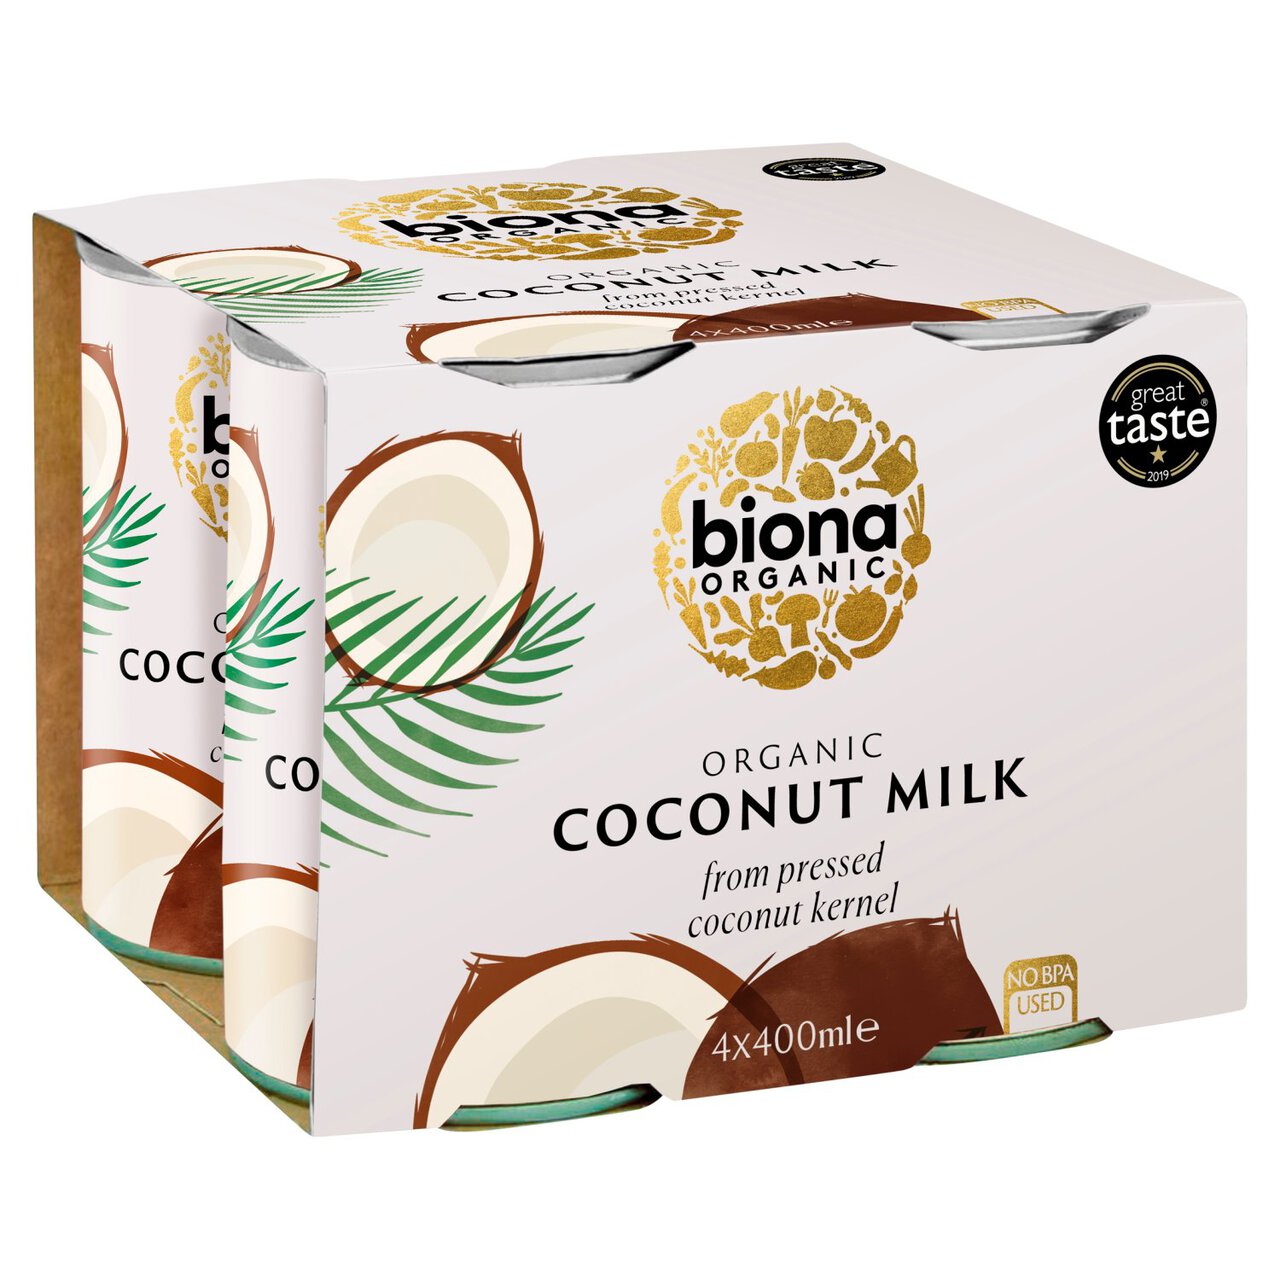 Biona Organic Coconut Milk 4 x 400ml